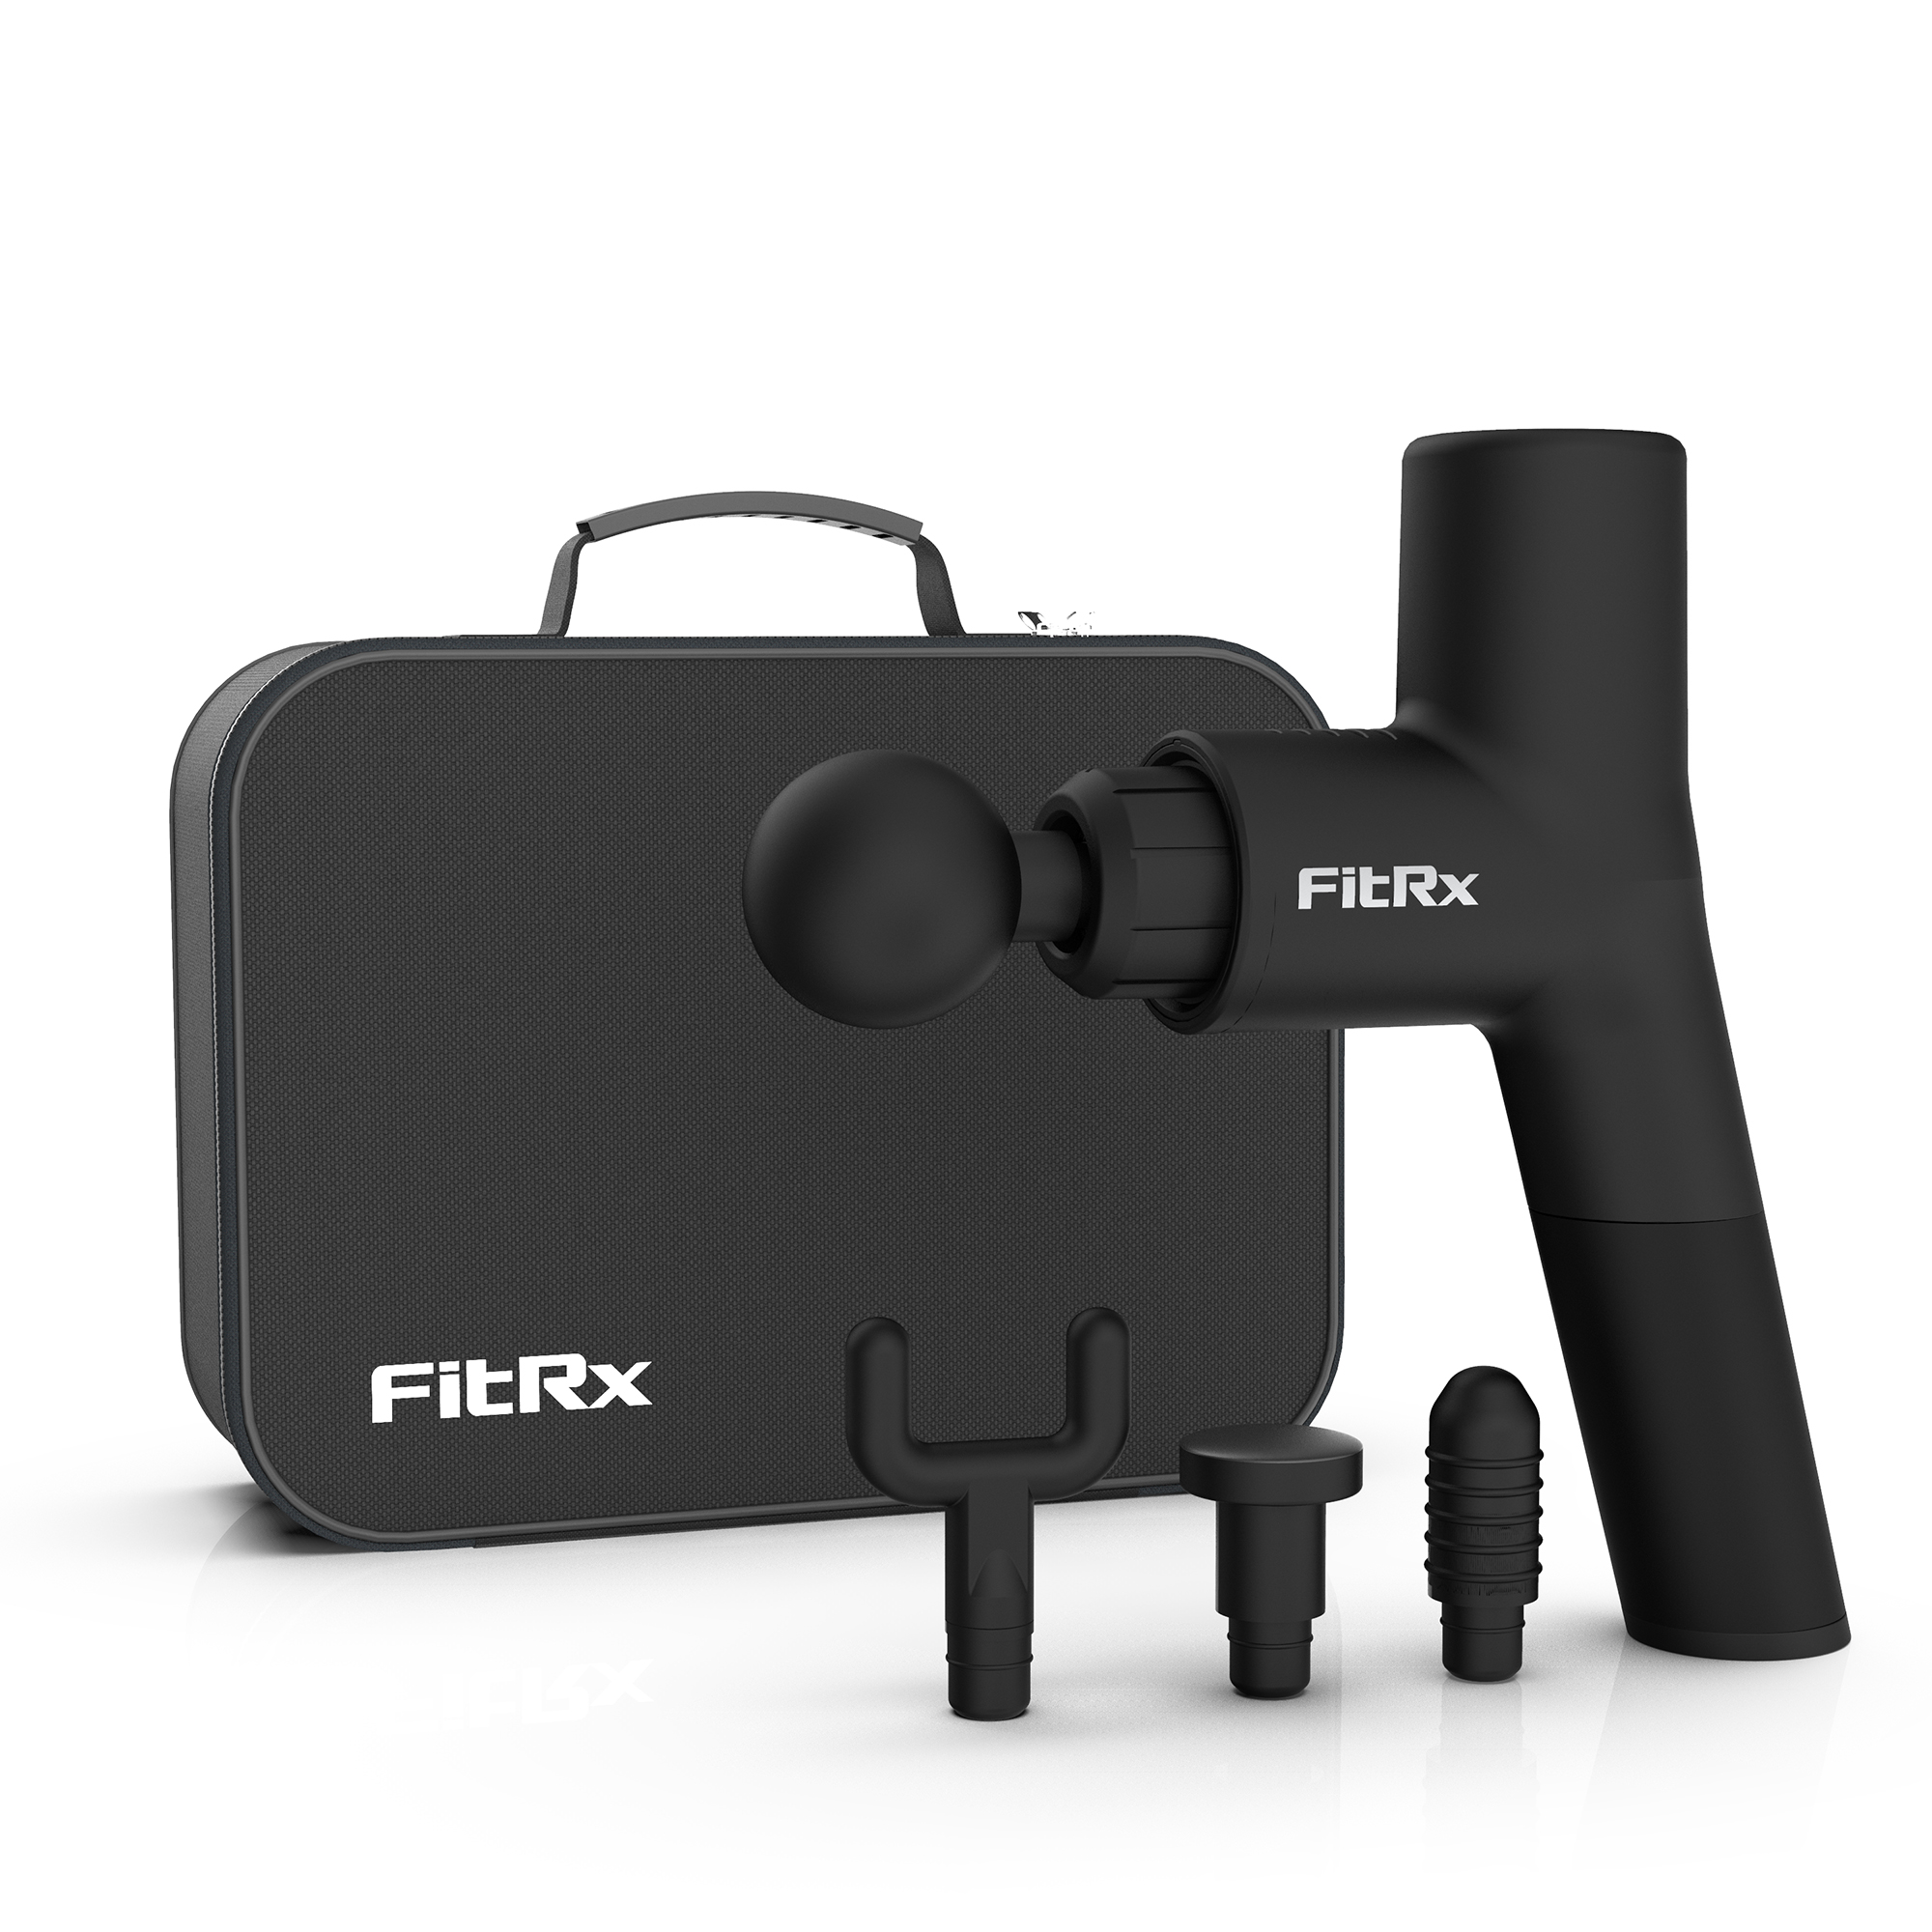 FitRx Muscle Massage Gun- Handheld Therapeutic Percussion Massager